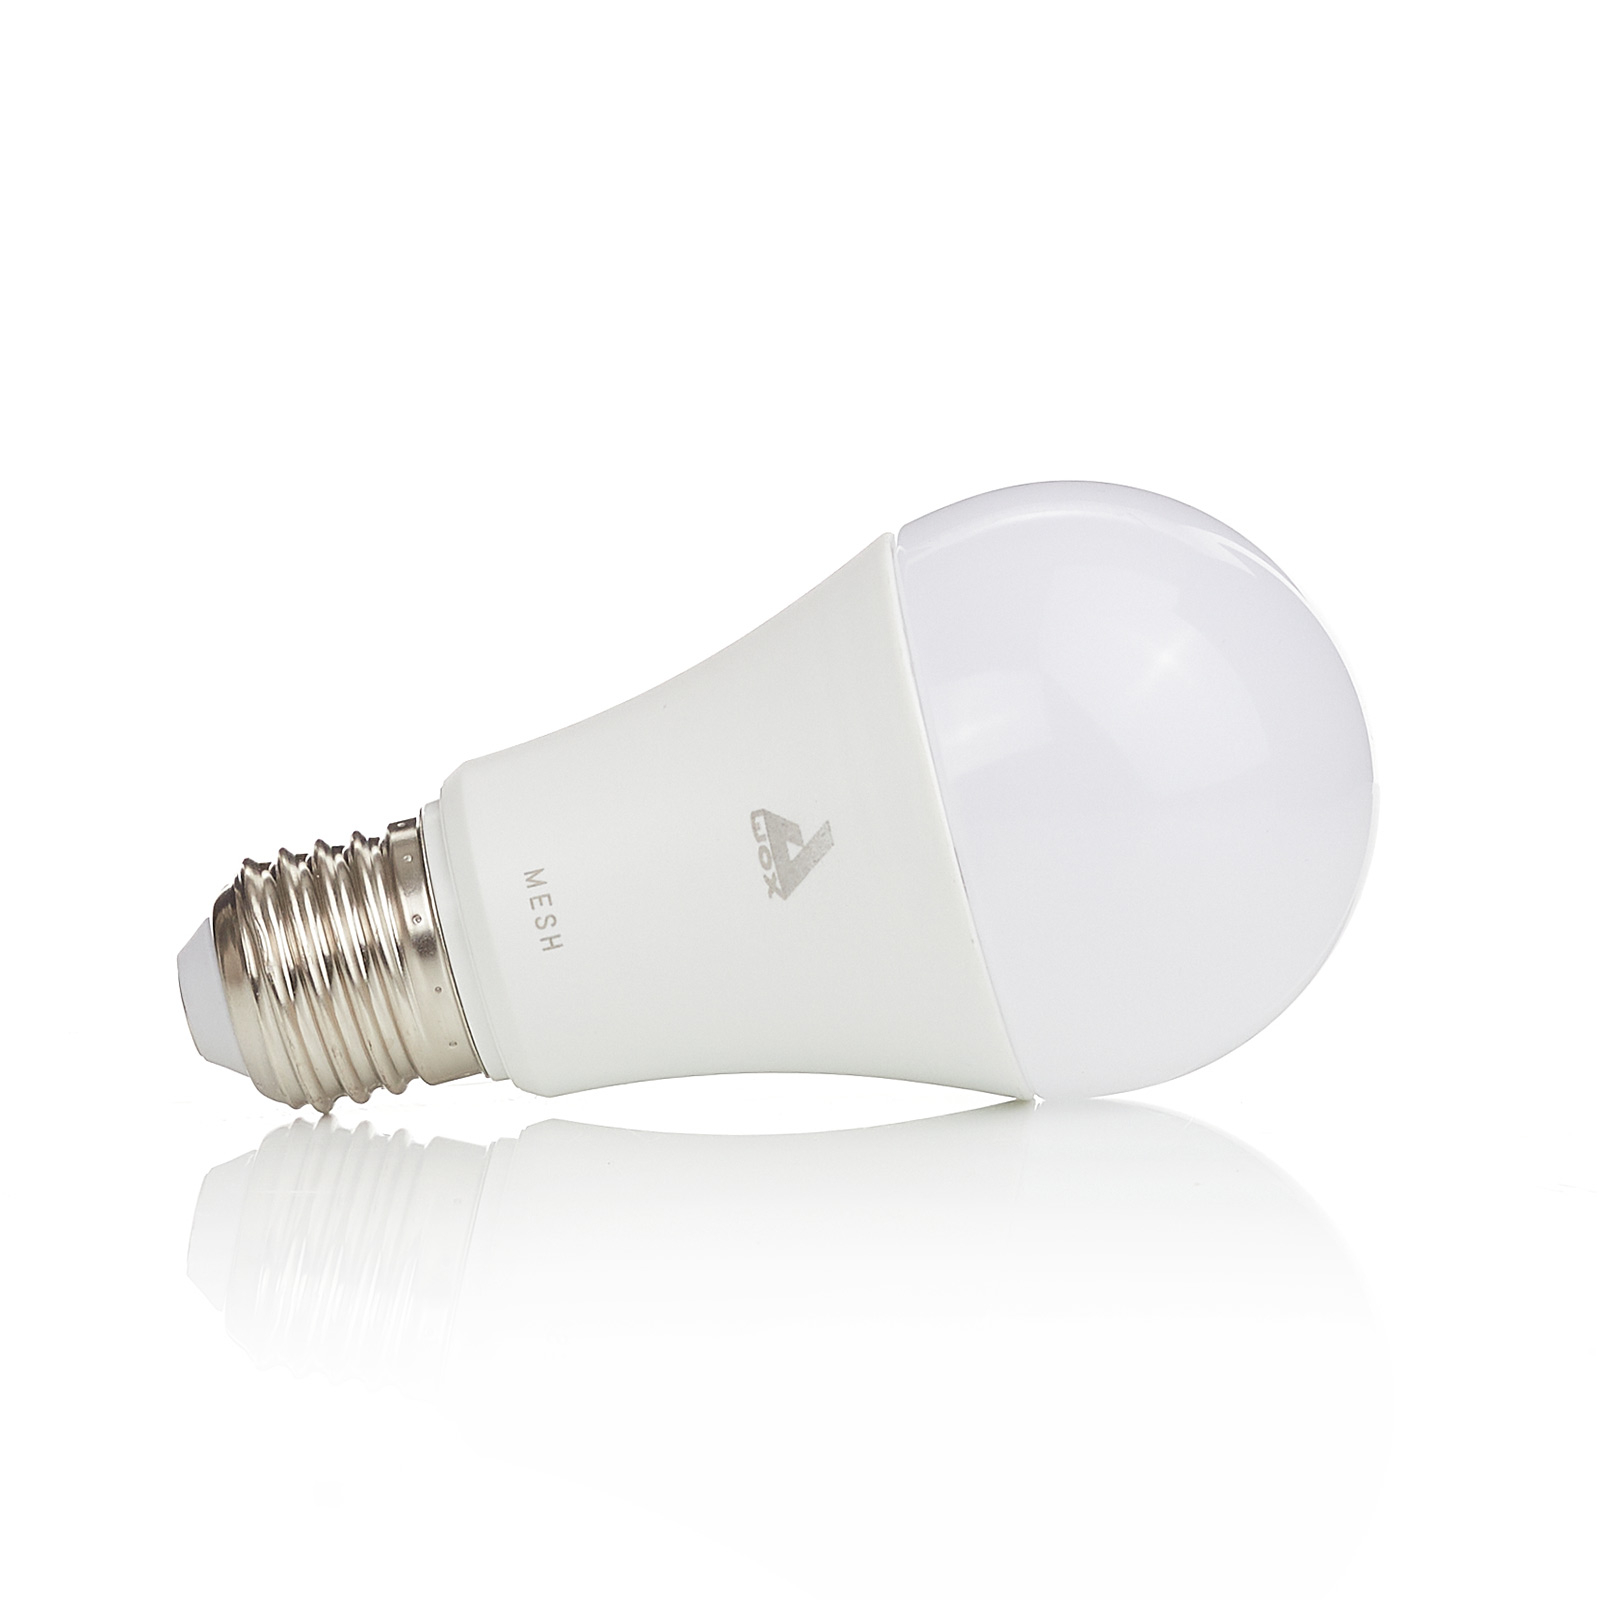 toewijding glans Geestig EGLO connect Verres-C LED buiten wandlamp rvs | Lampen24.be